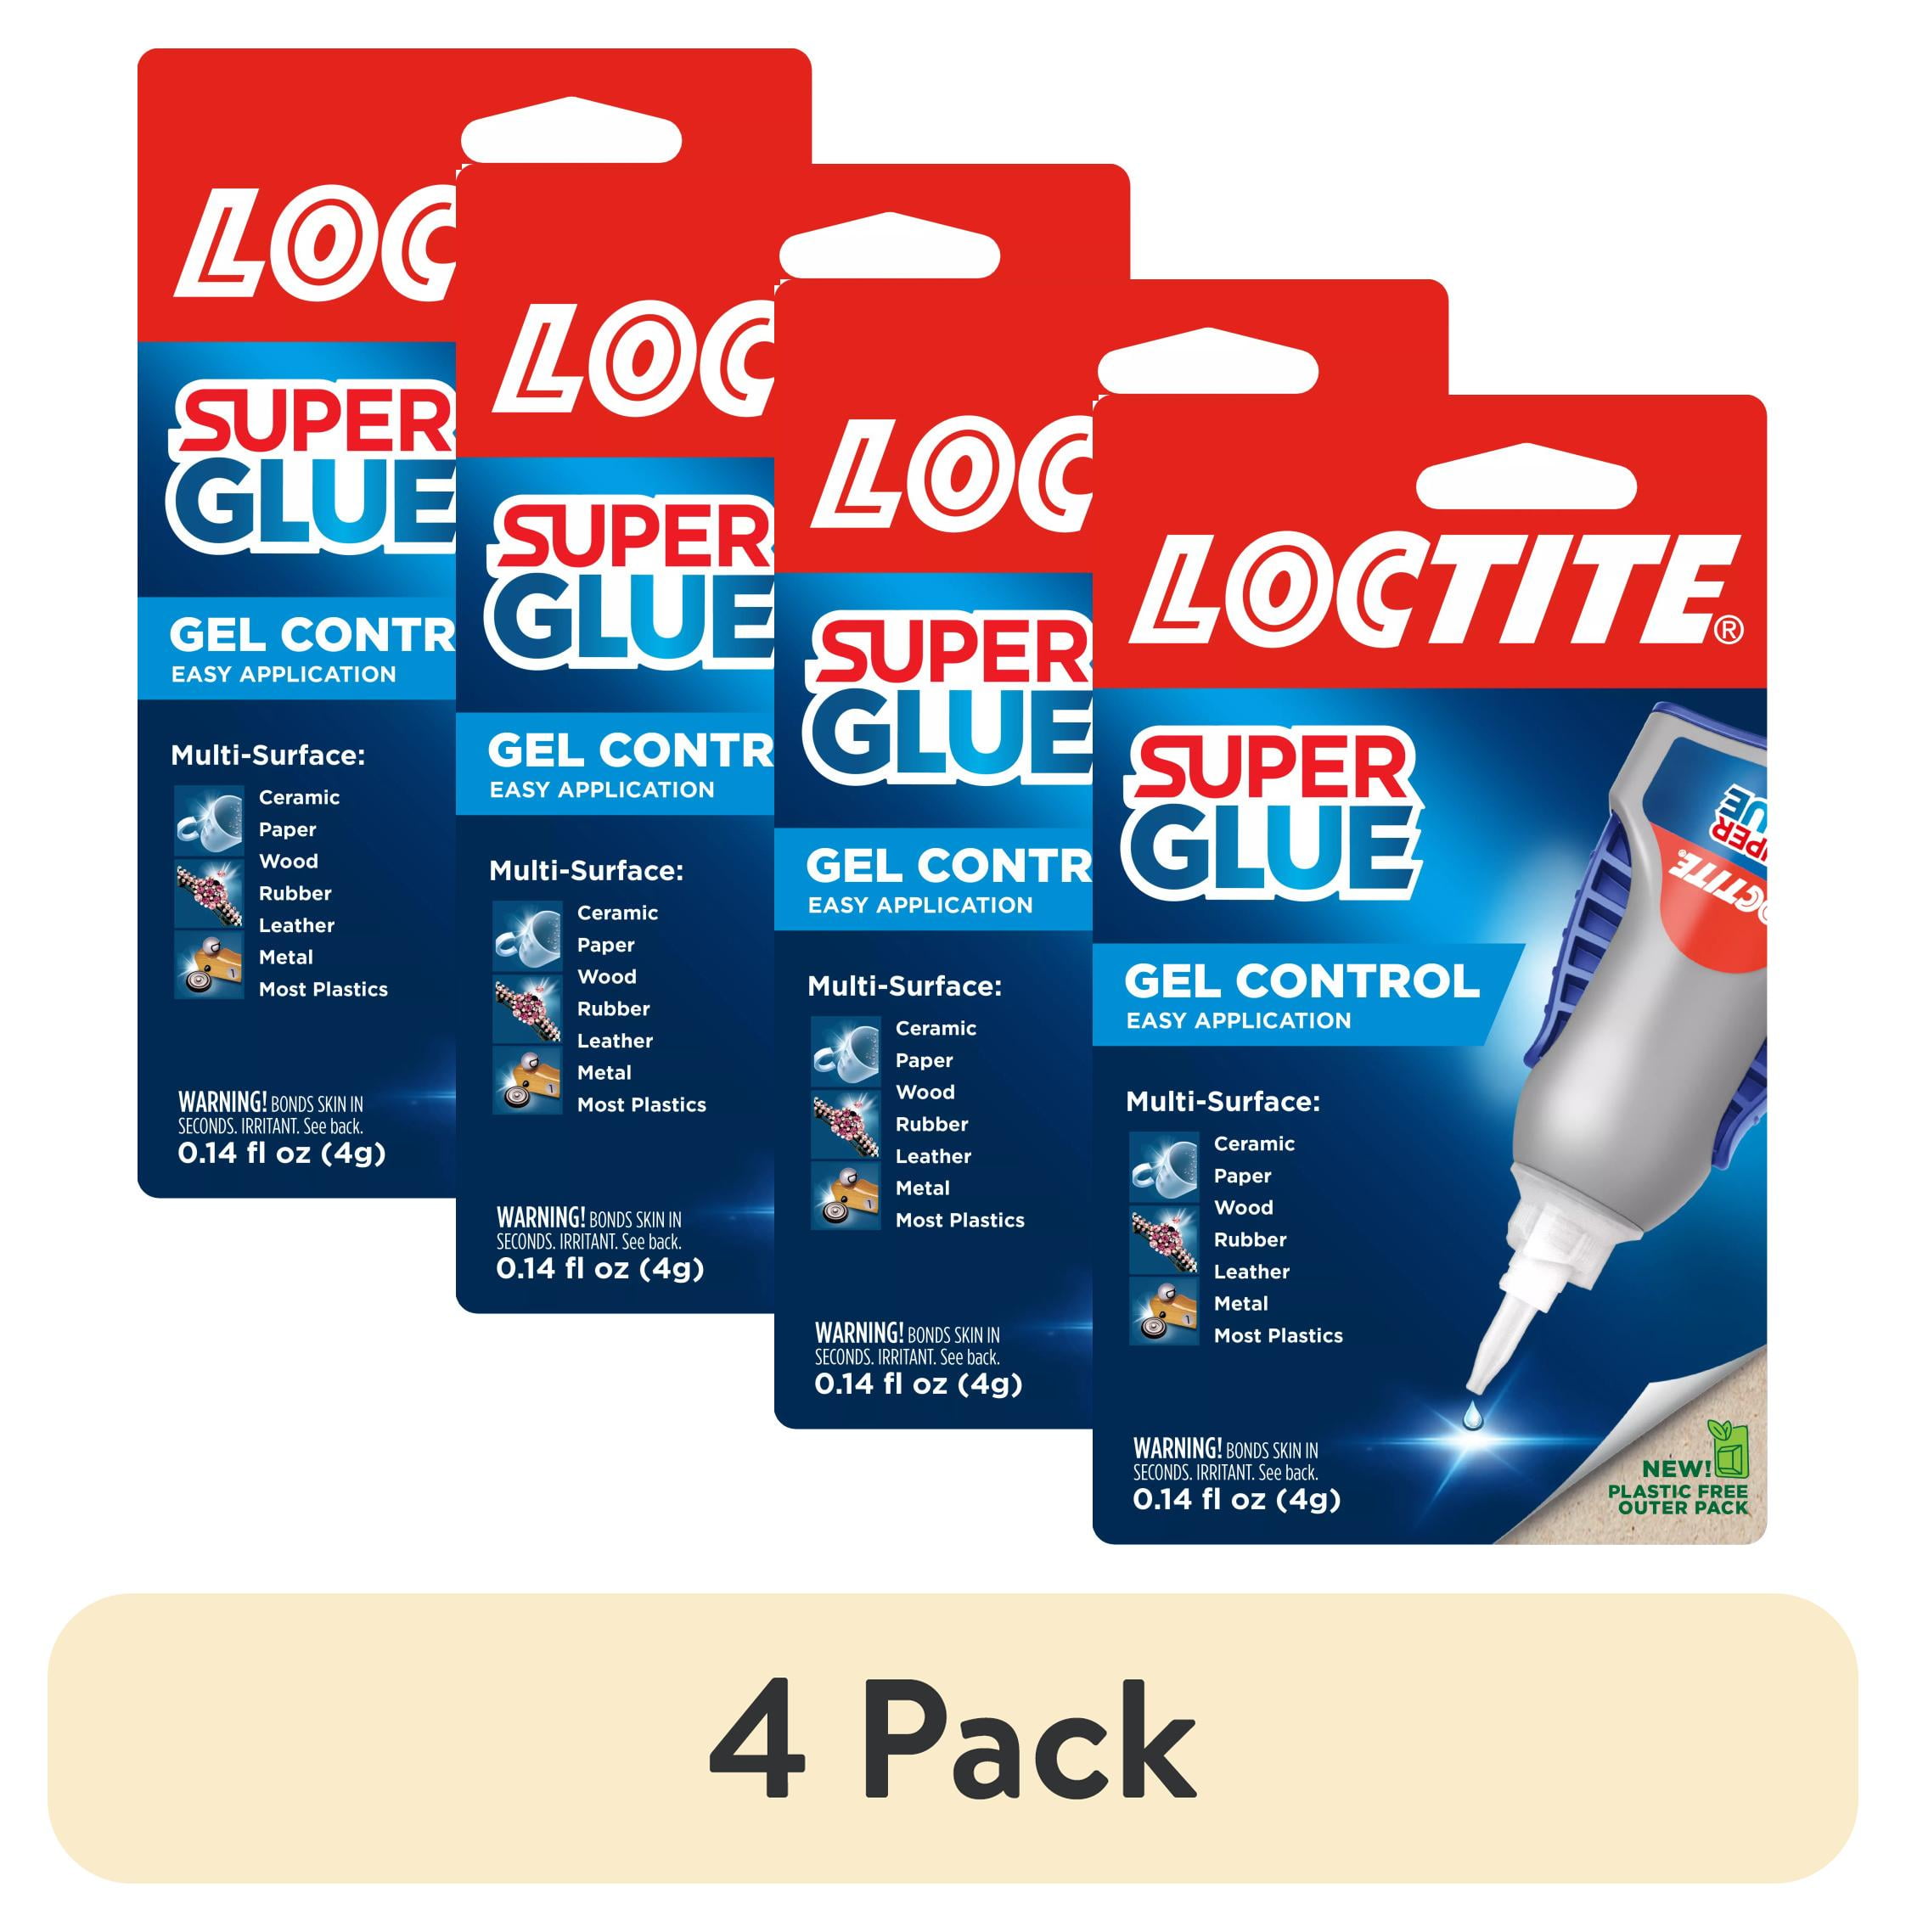 Henkel Corporation Super Glue Gel, 2-Pack - 2 g 5633298